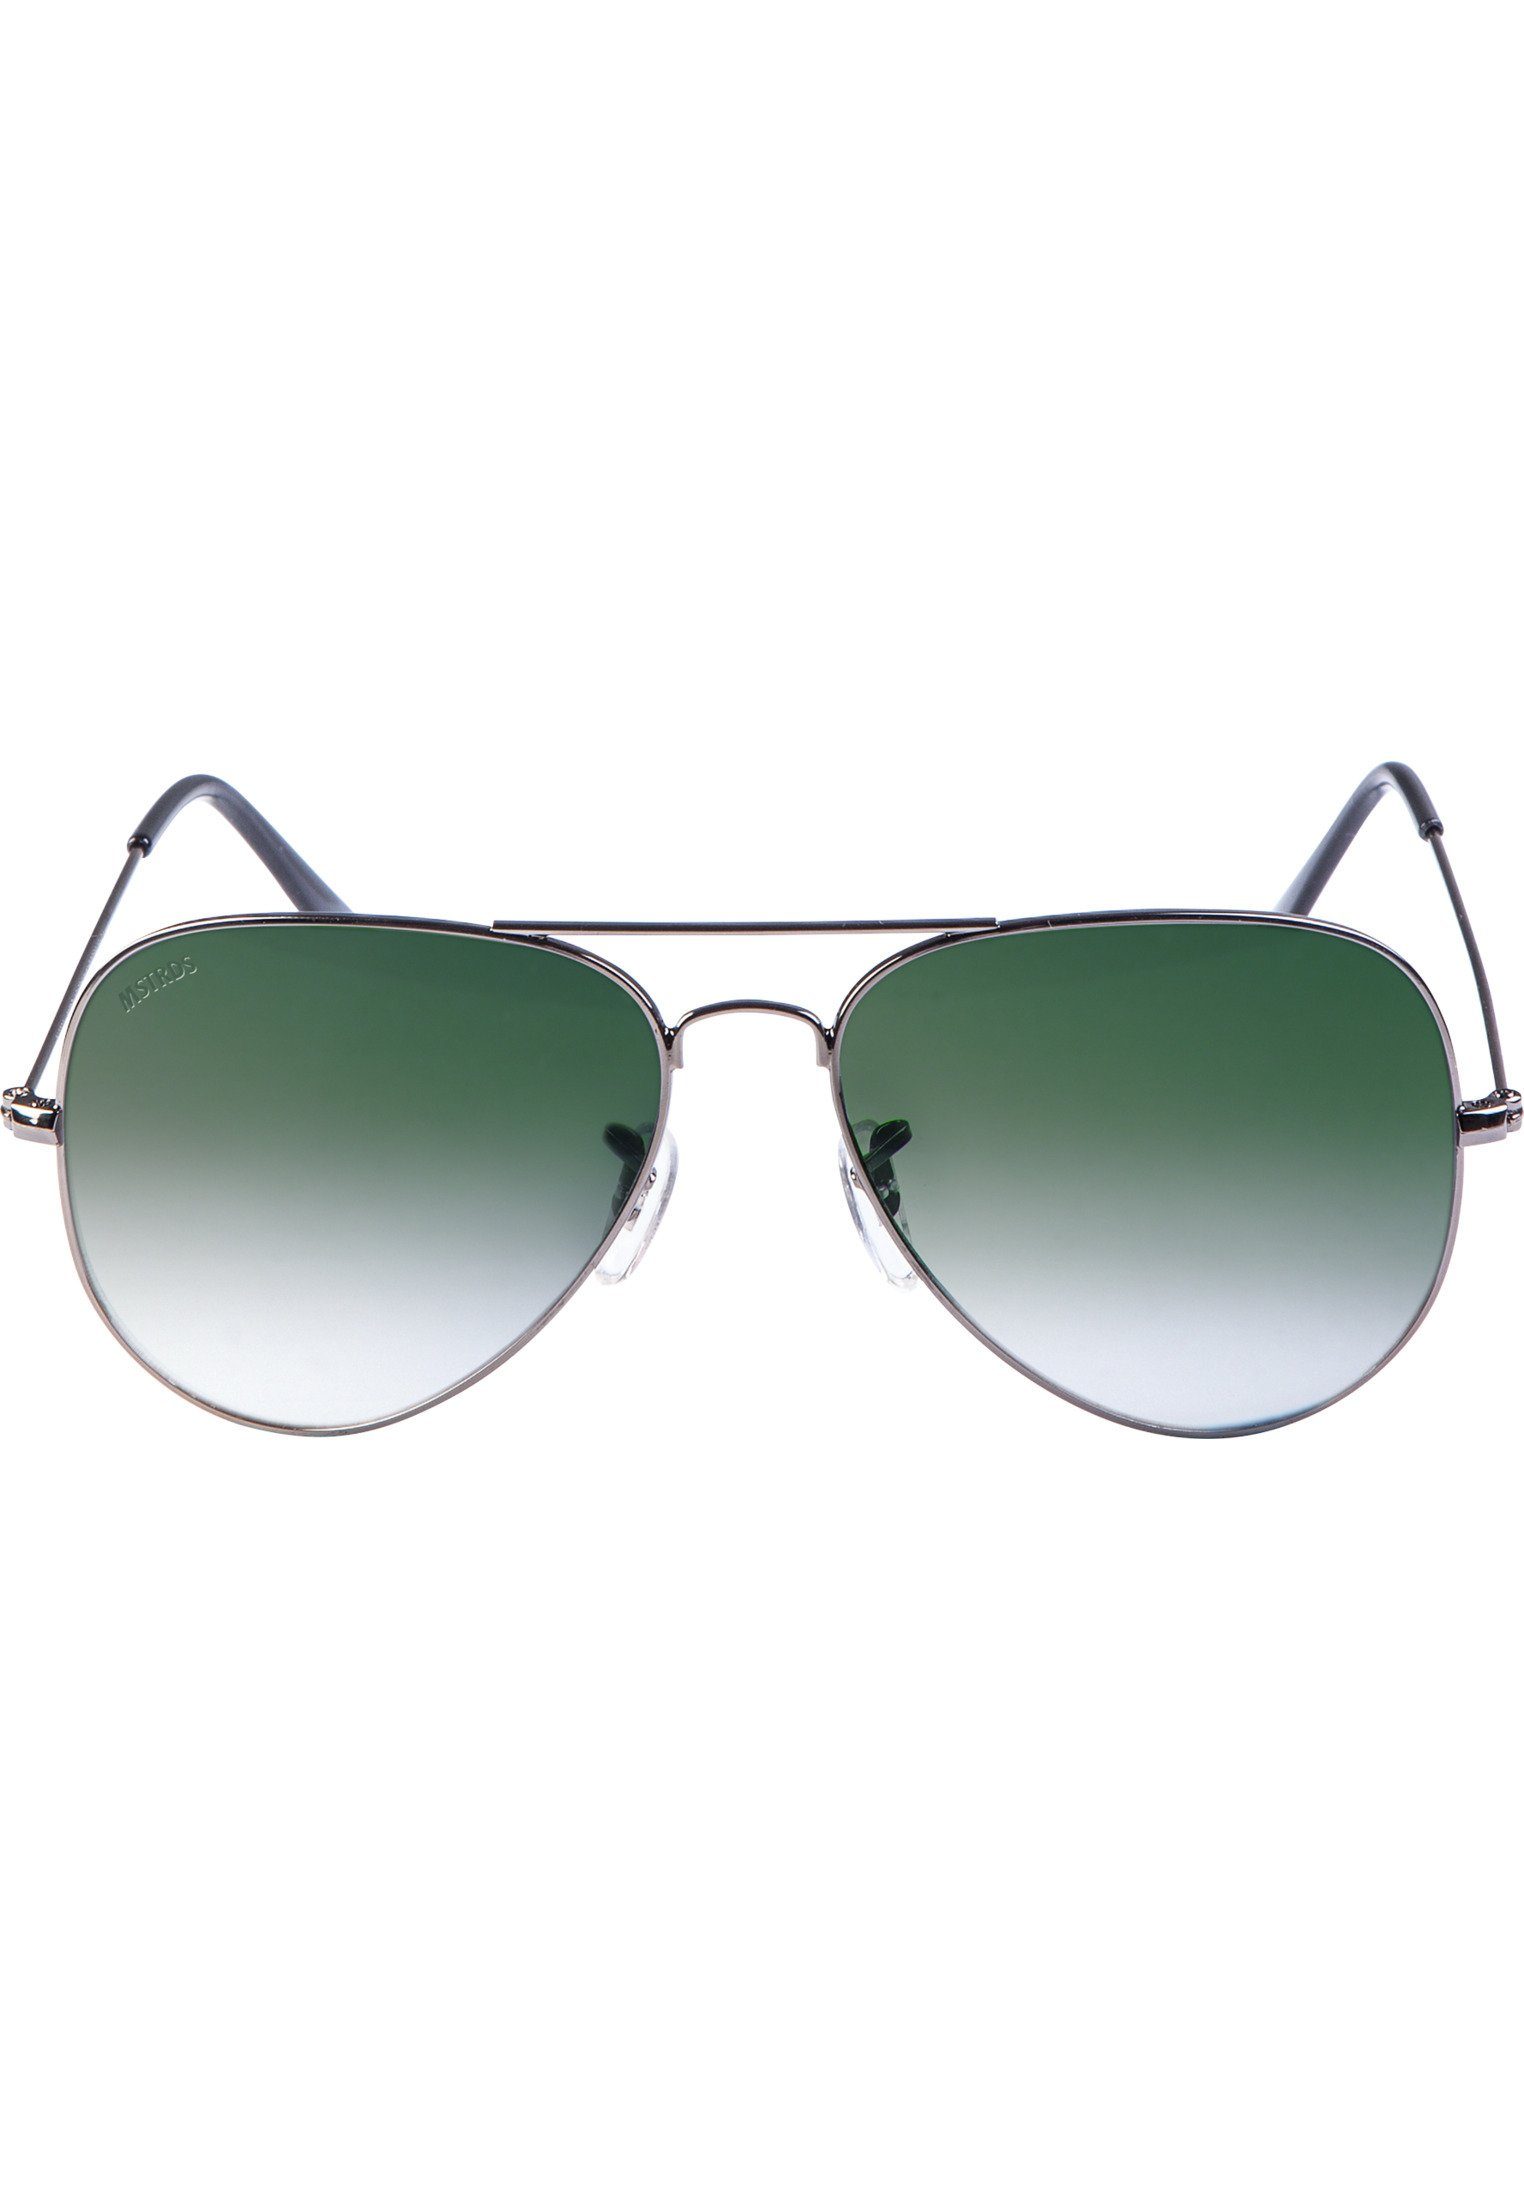 Youth Sonnenbrille PureAv Accessoires gun/green MSTRDS Sunglasses